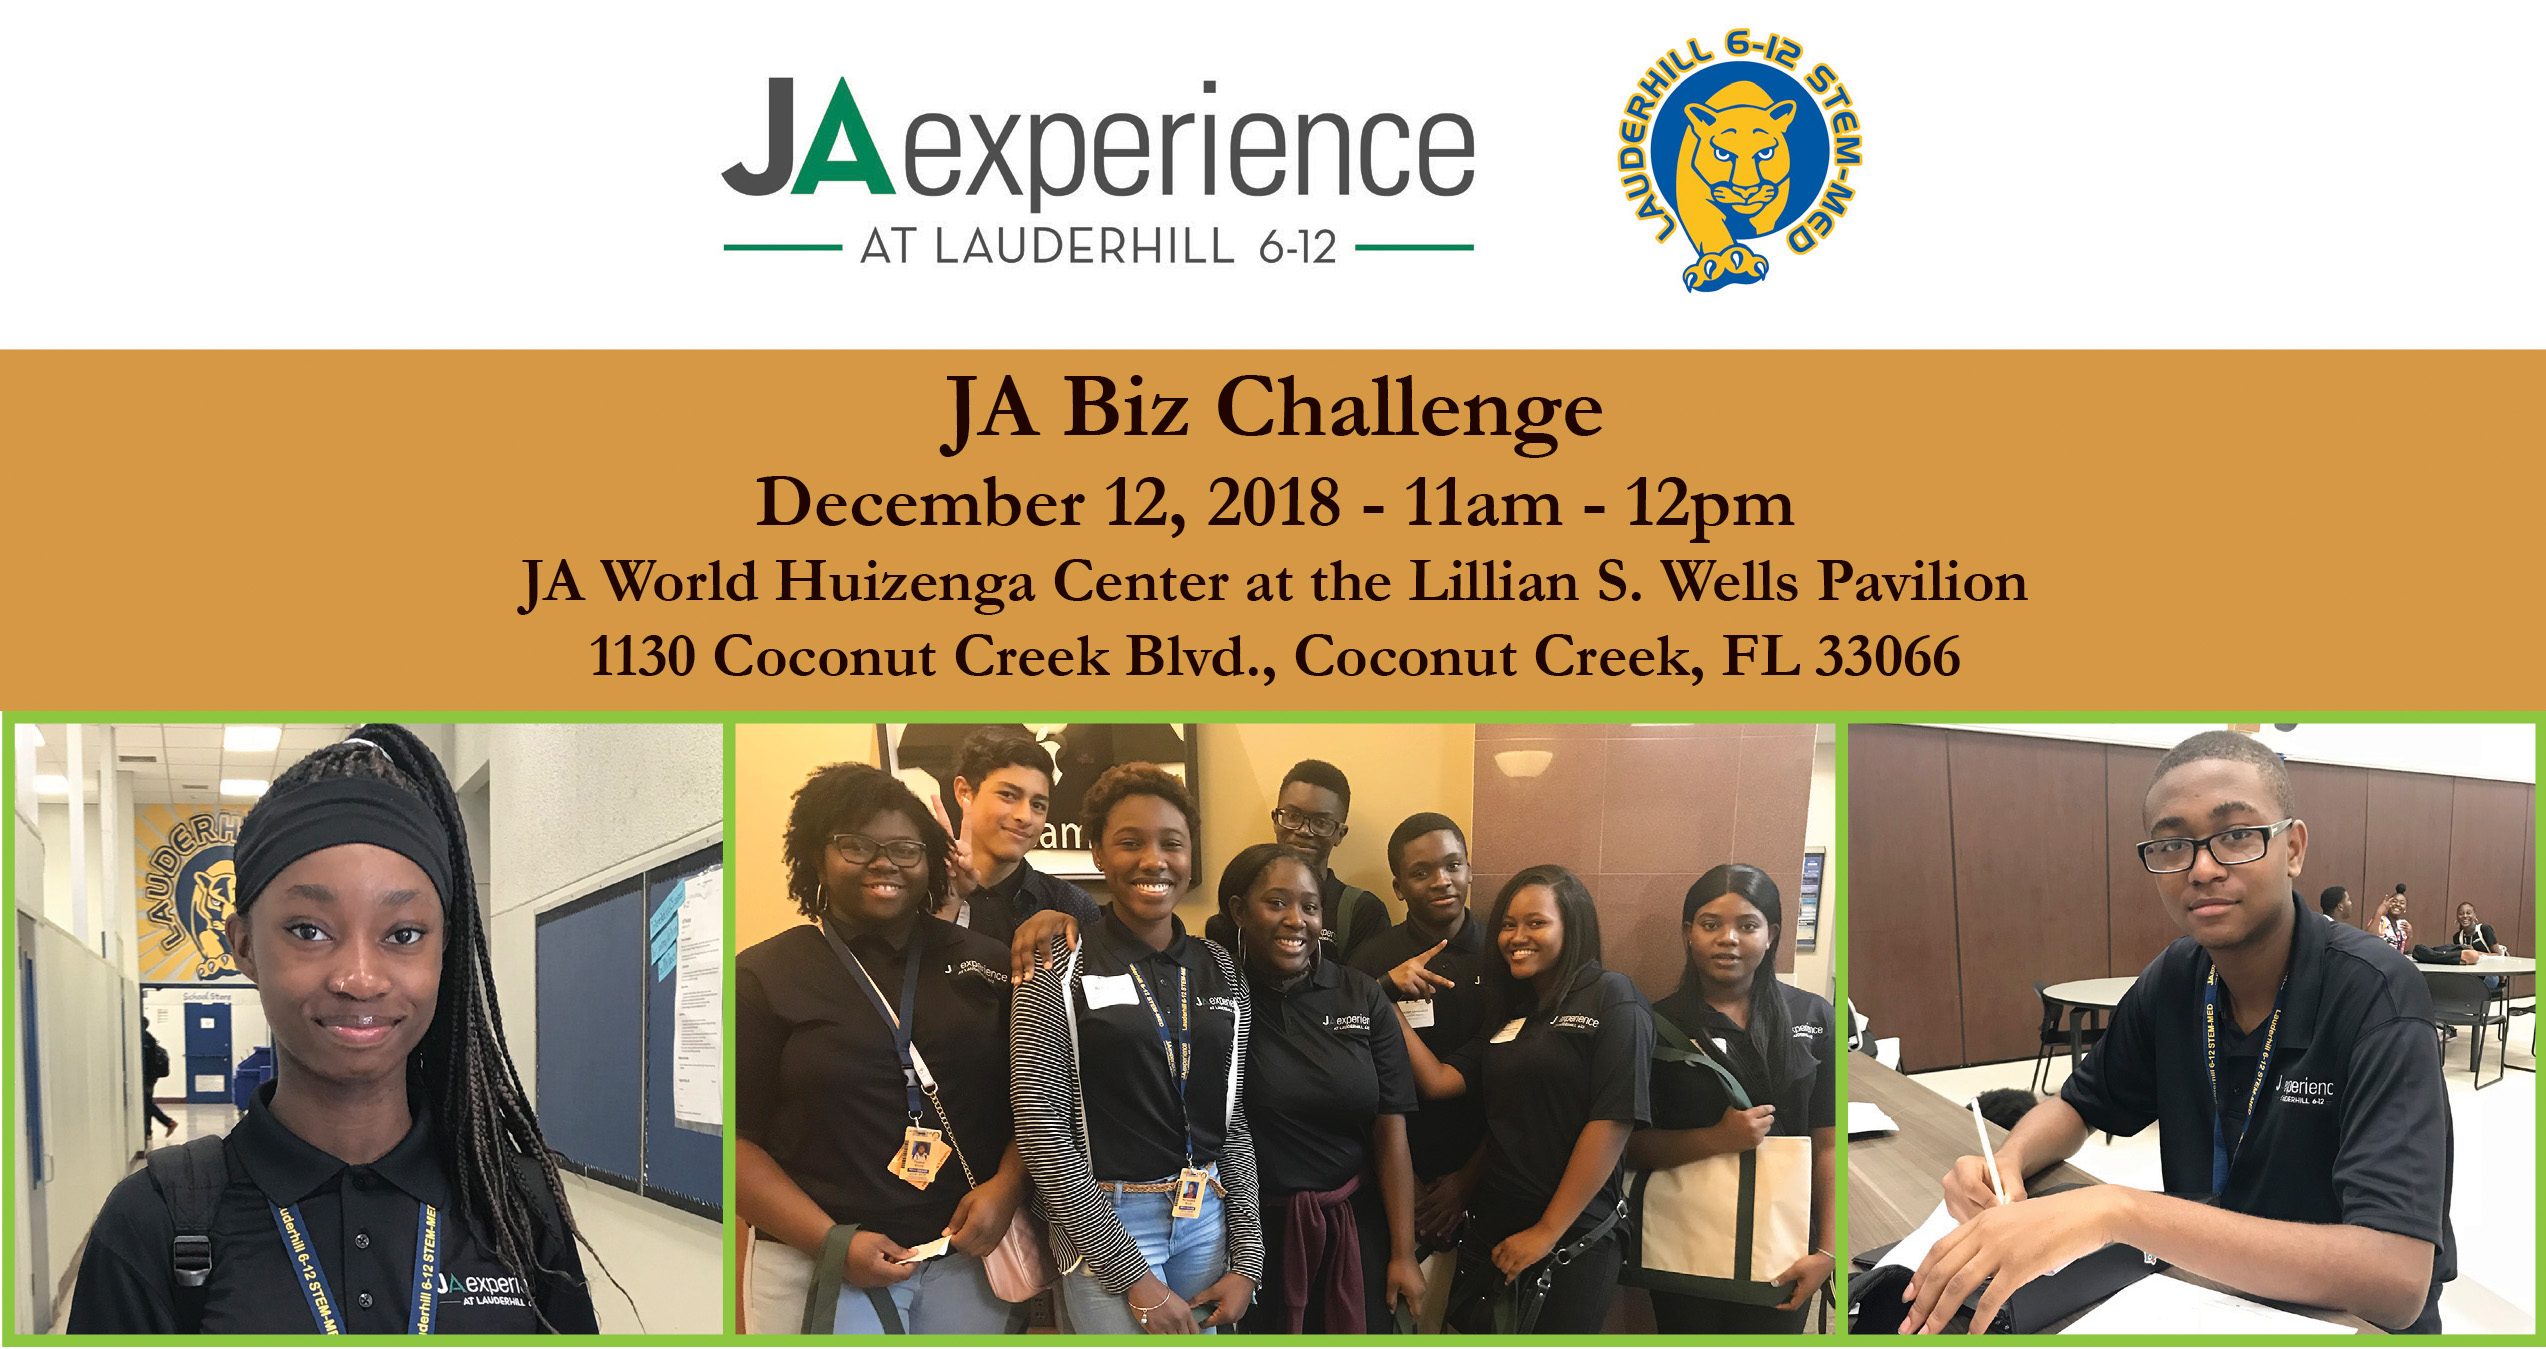 JA Experience Announces JA Biz Challenge